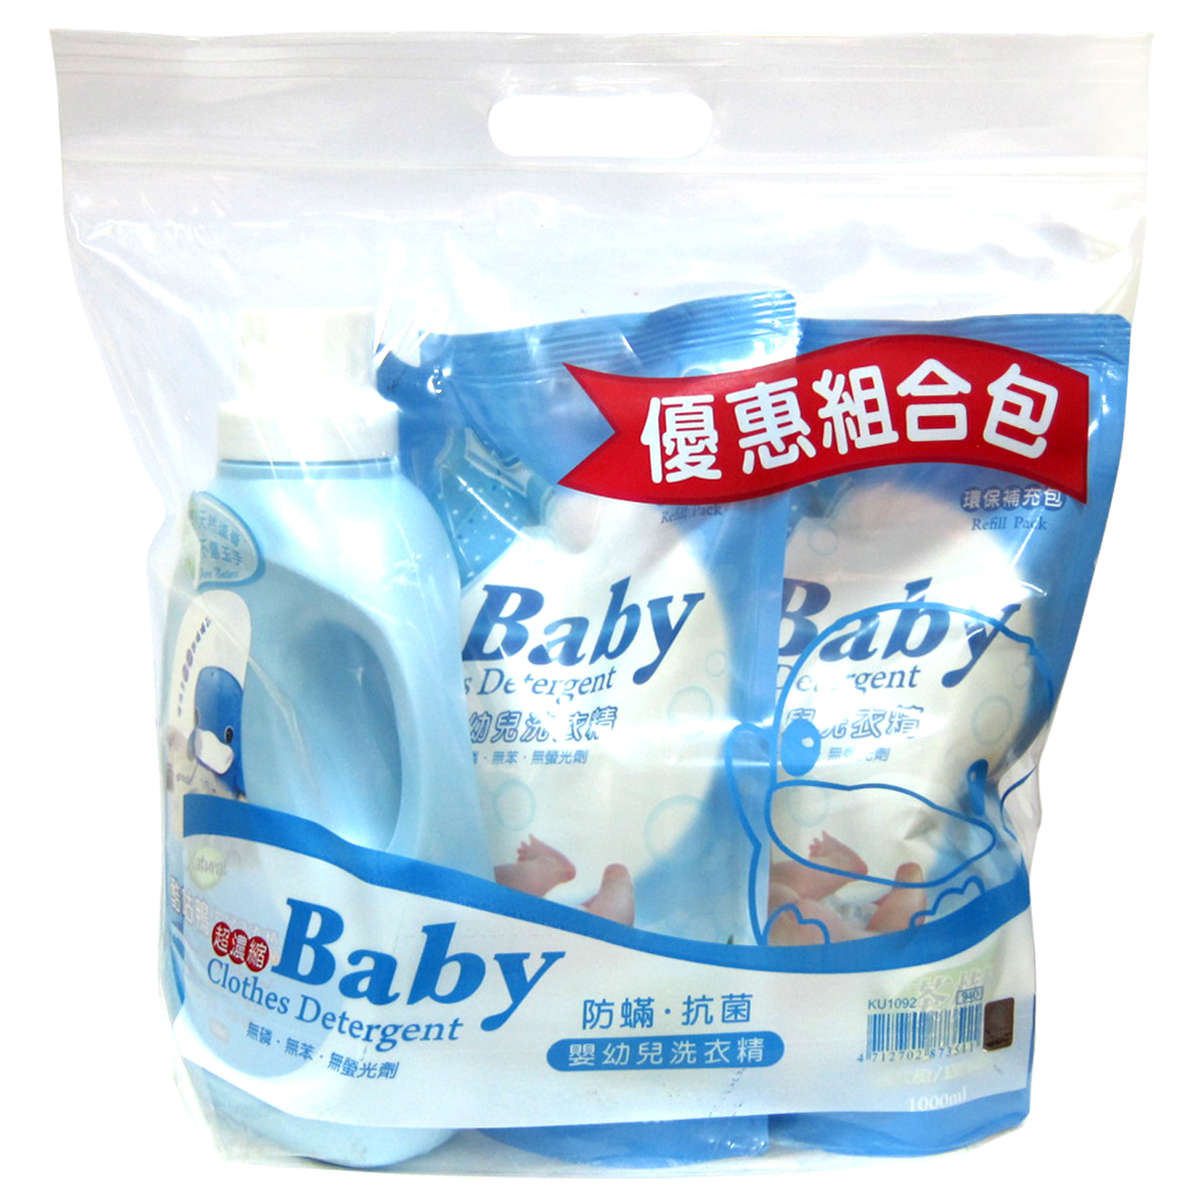 KUKU 嬰兒濃縮洗衣精優惠裝 - 1200毫升 + 1000毫升 x 2包